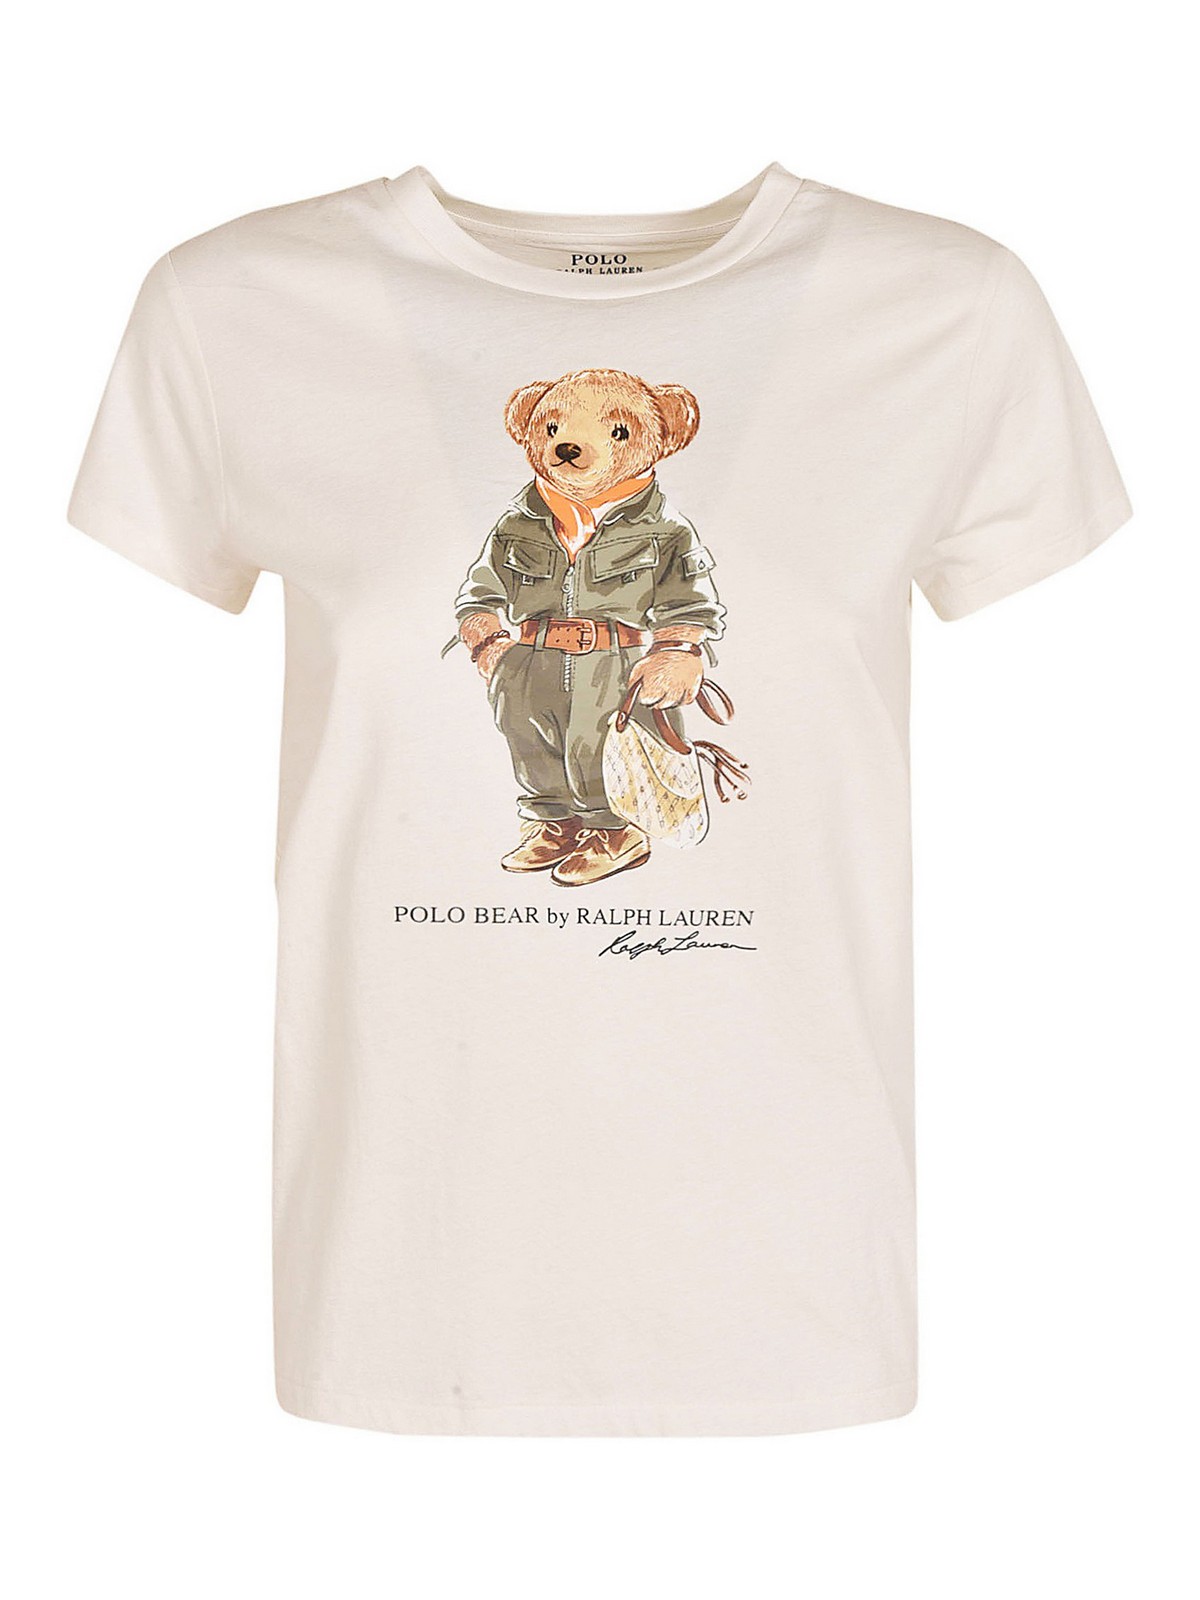 Portuguese Diver bench T-shirts Polo Ralph Lauren - Polo Bear T-shirt - 211856658001 | iKRIX.com